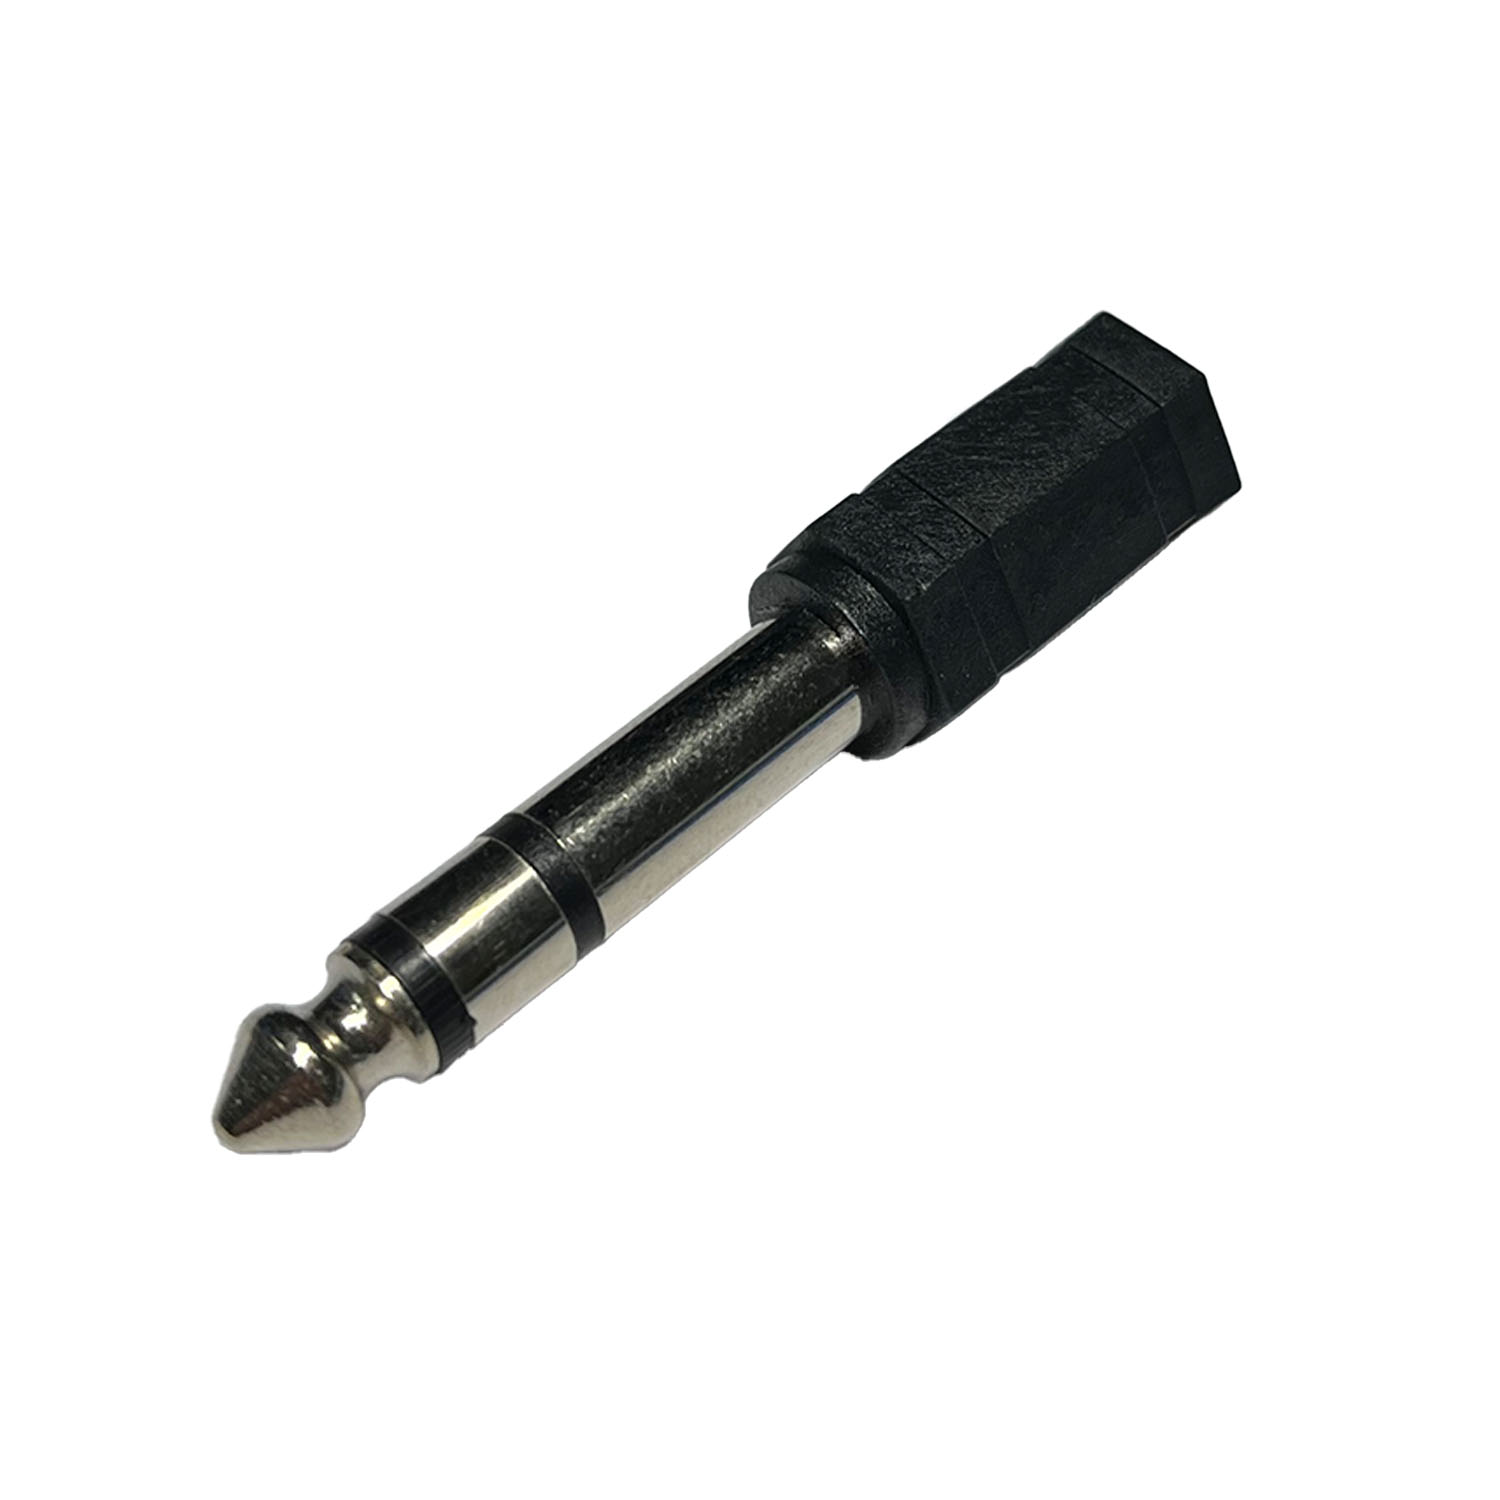 Kopfhörer Adapter Klinke 6,35 mm zu 3,5 mm